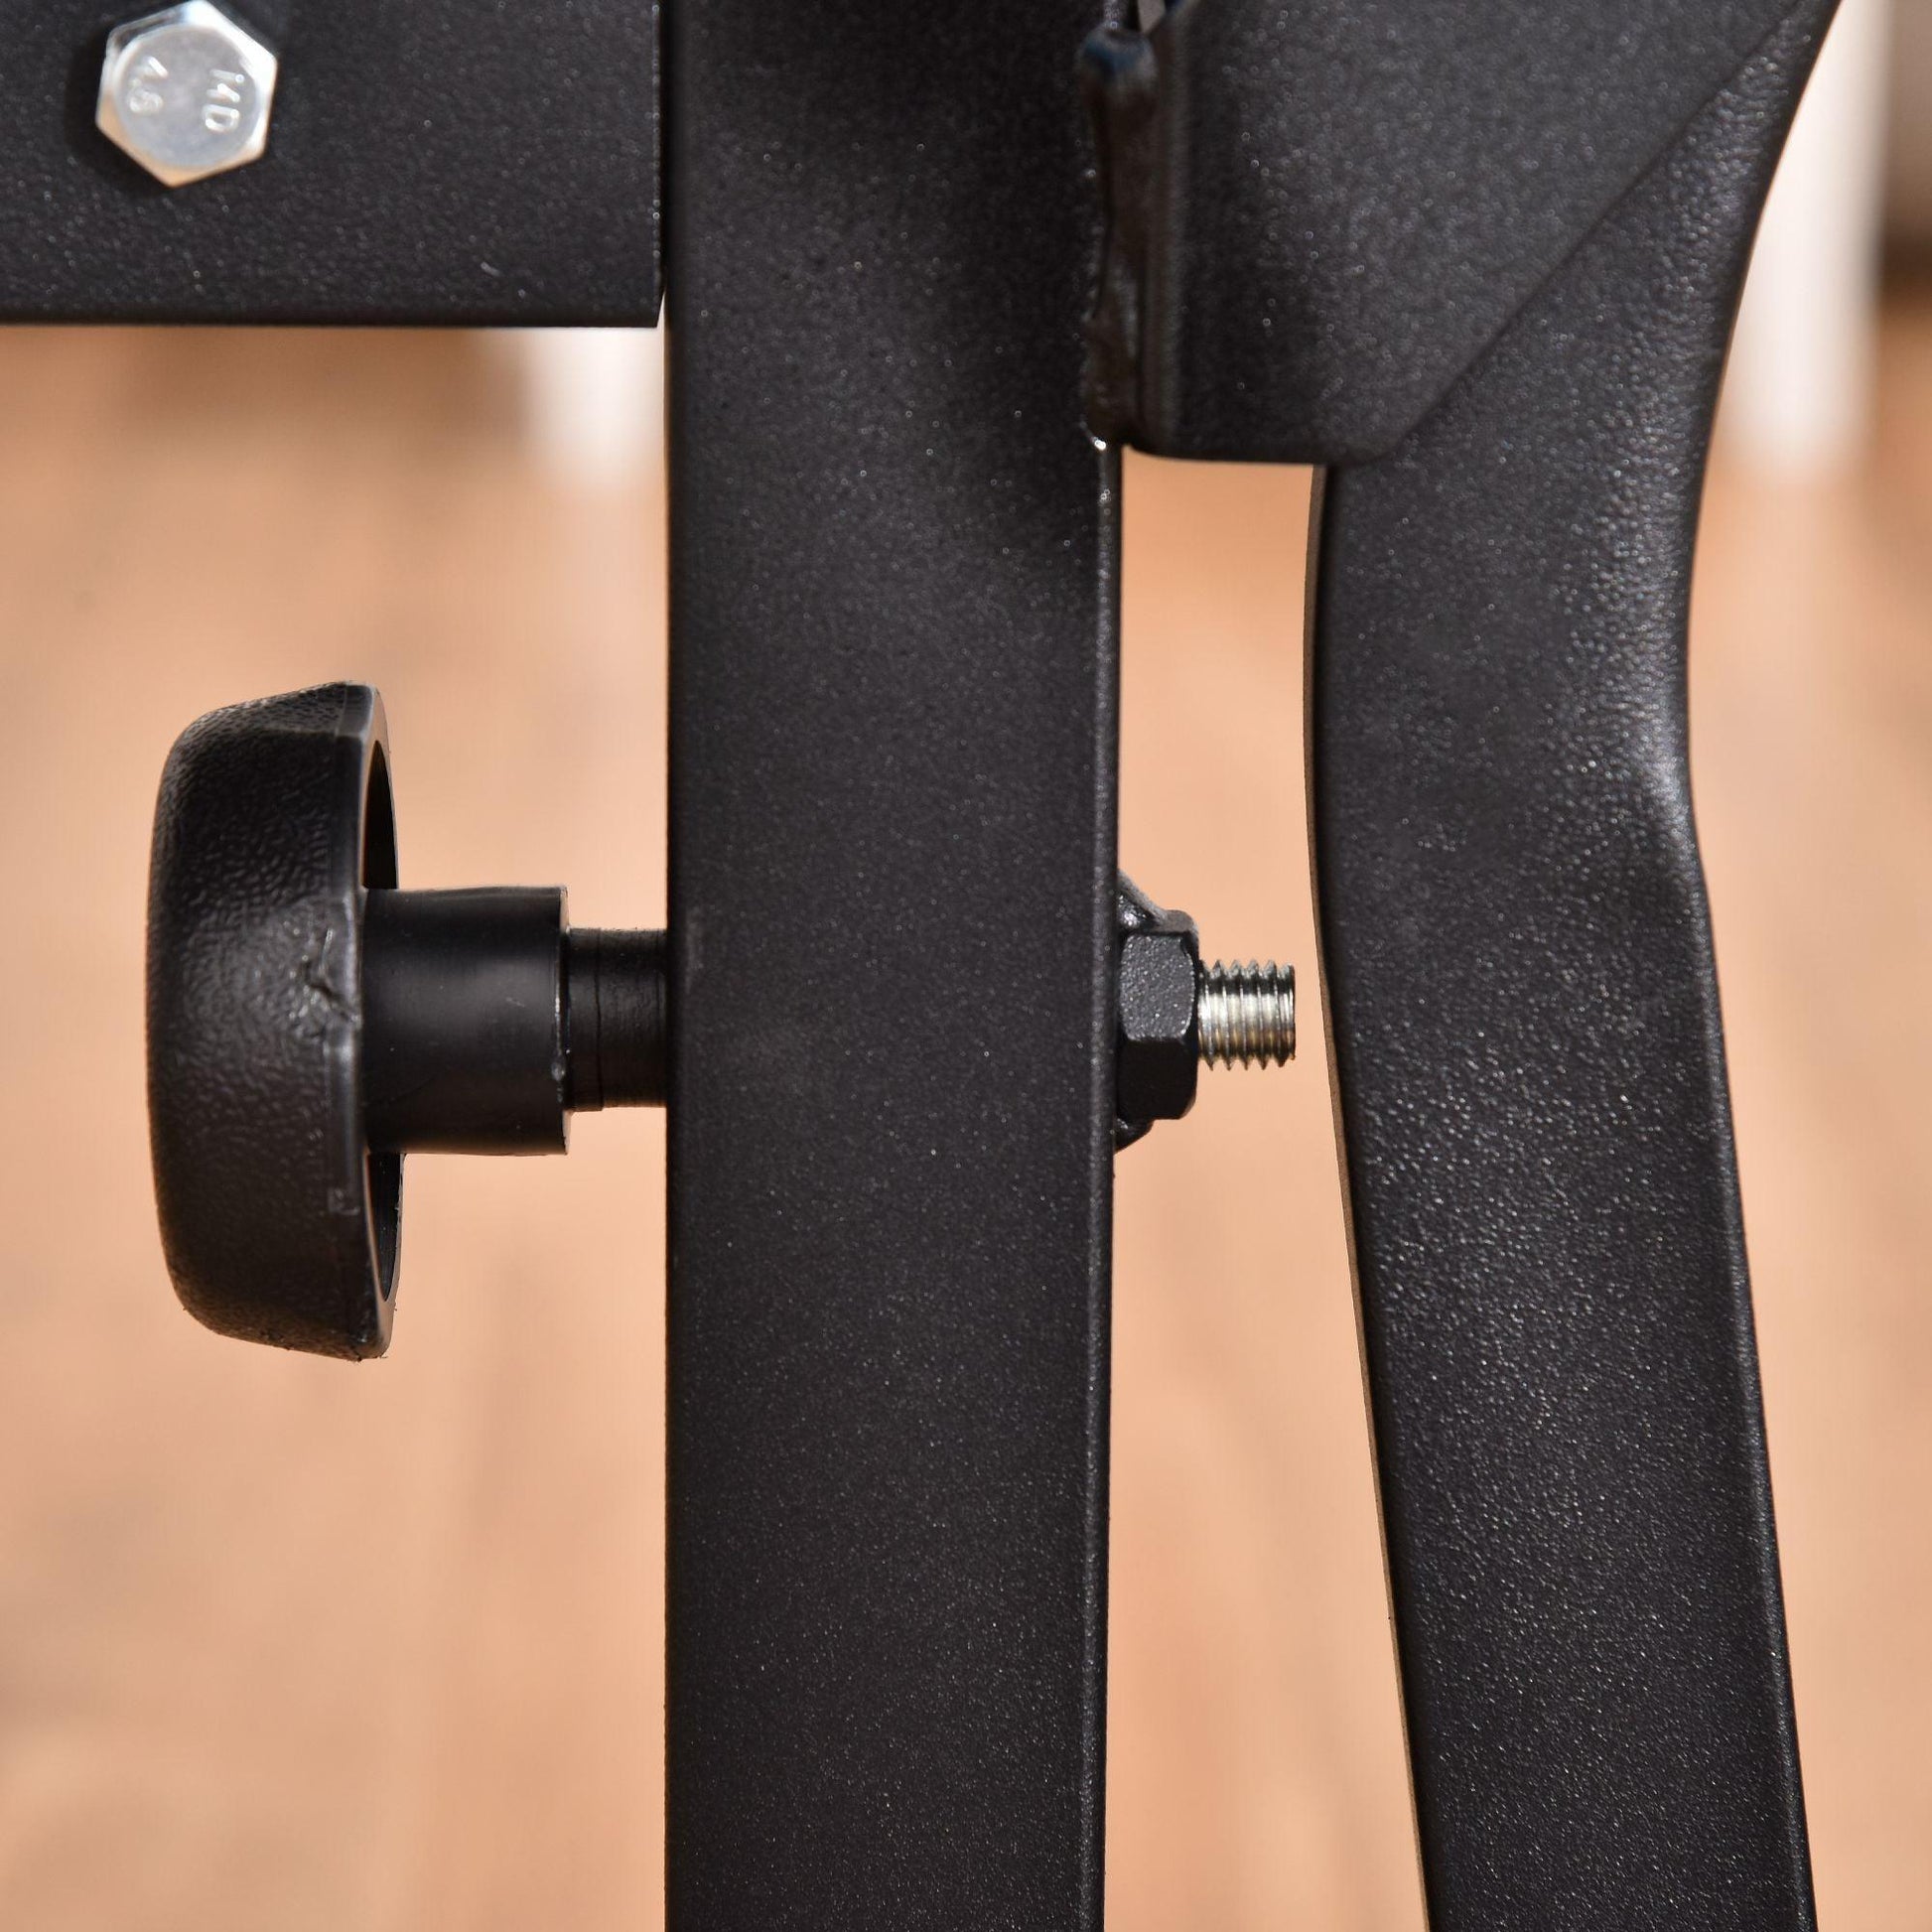 HOMCOM Adjustable Weight Bench with Leg Developer - Home Gym Essential - ALL4U RETAILER LTD